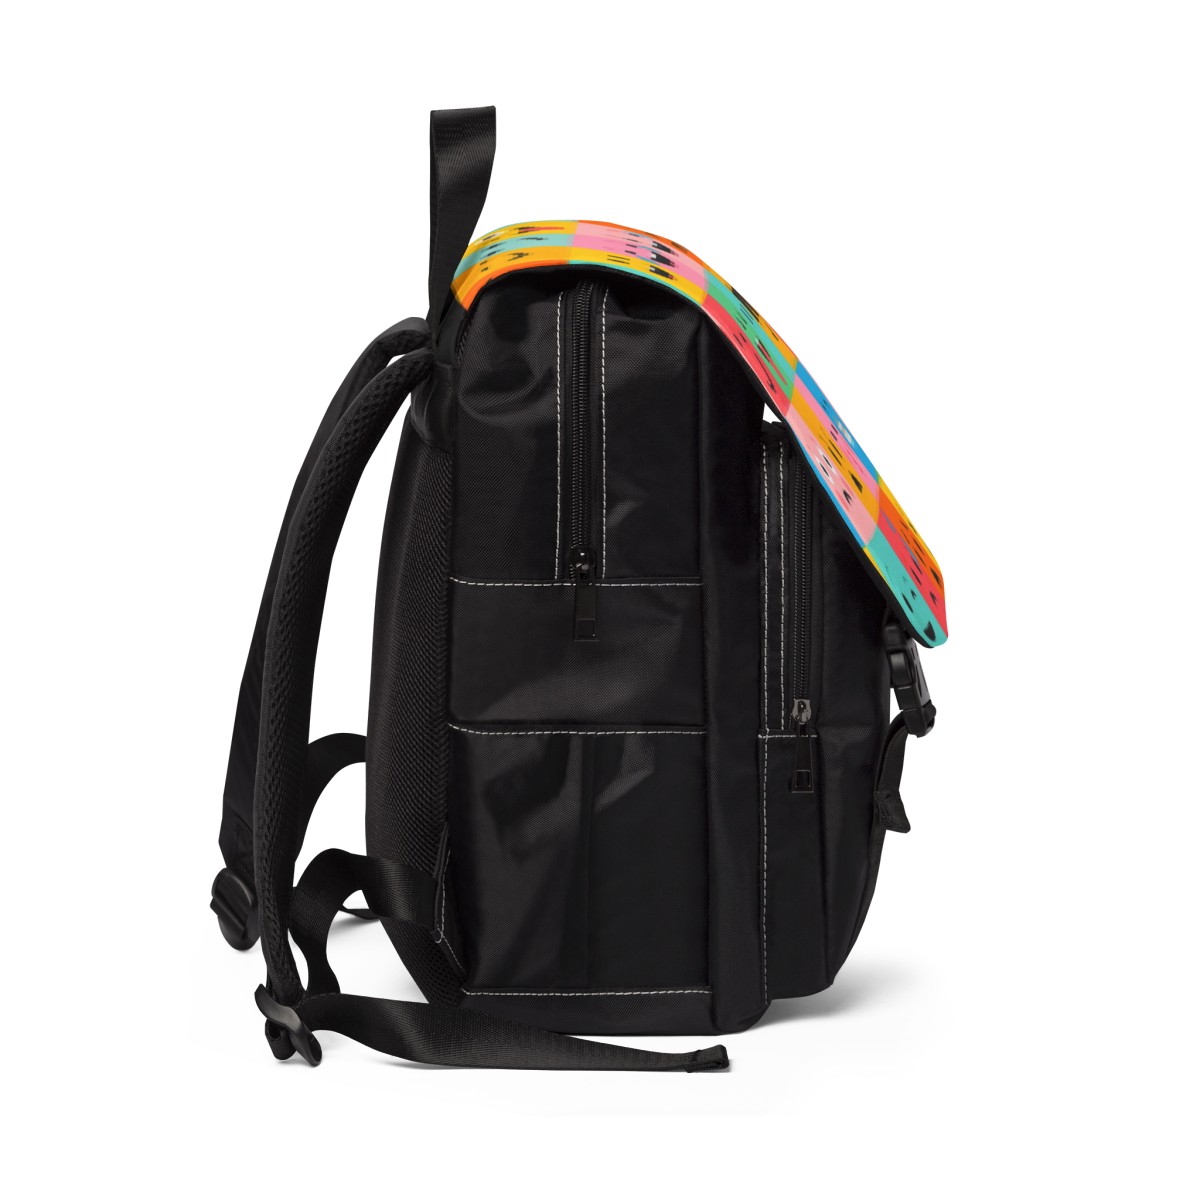 Unisex Casual Shoulder Backpack product thumbnail image